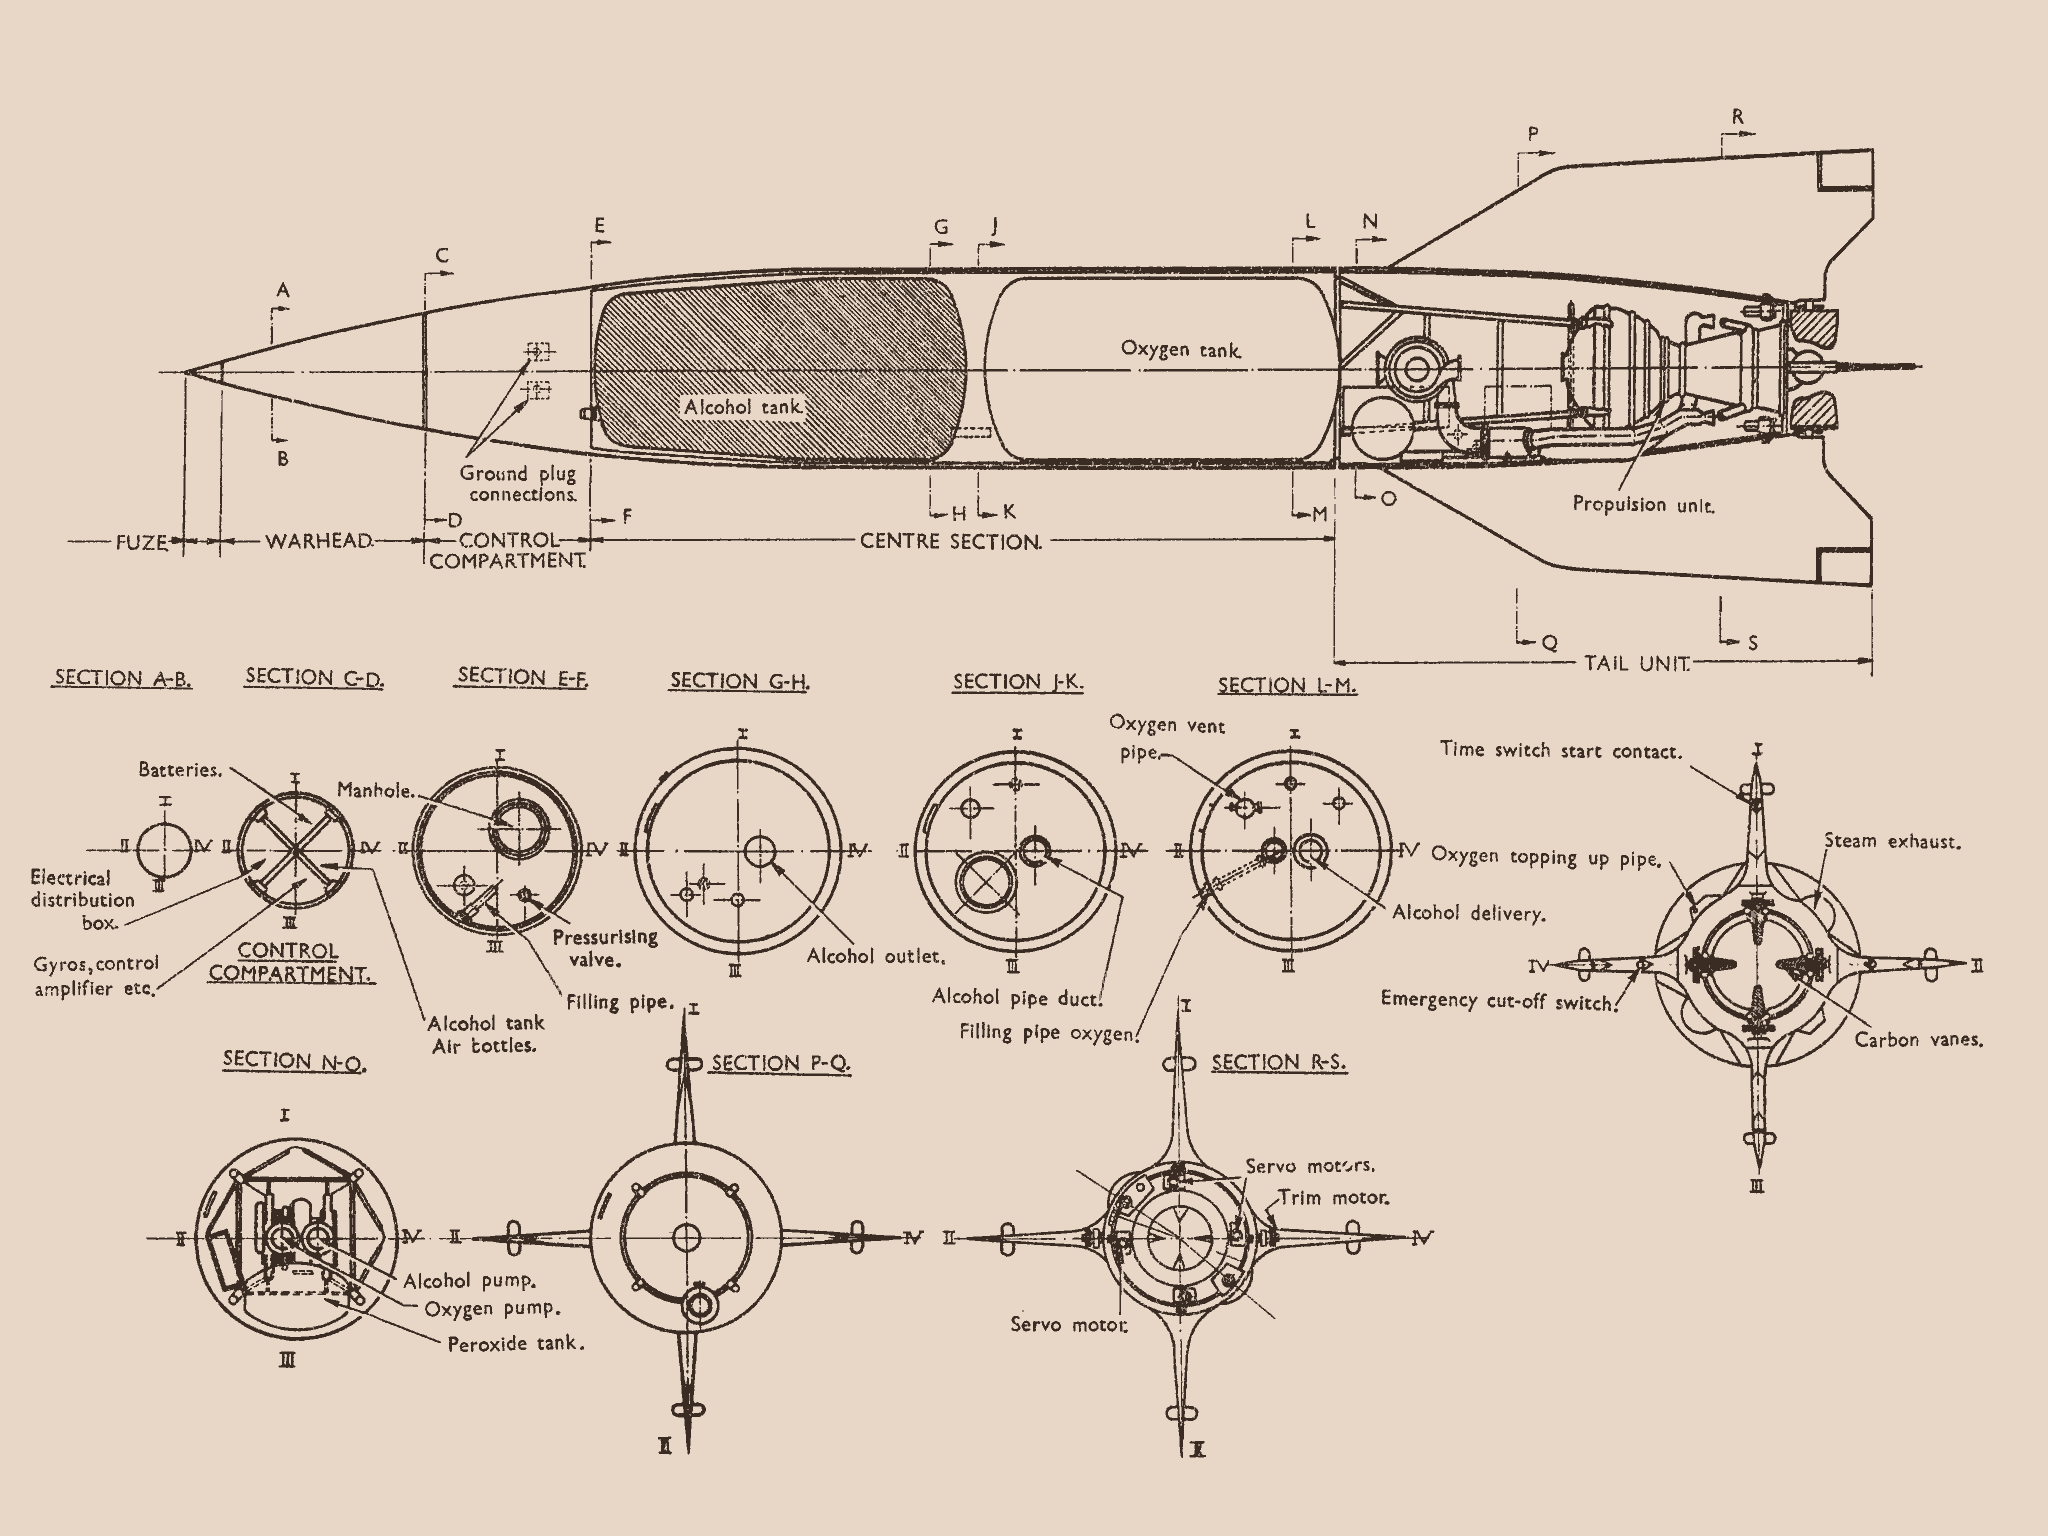 V-2 rocket blueprint